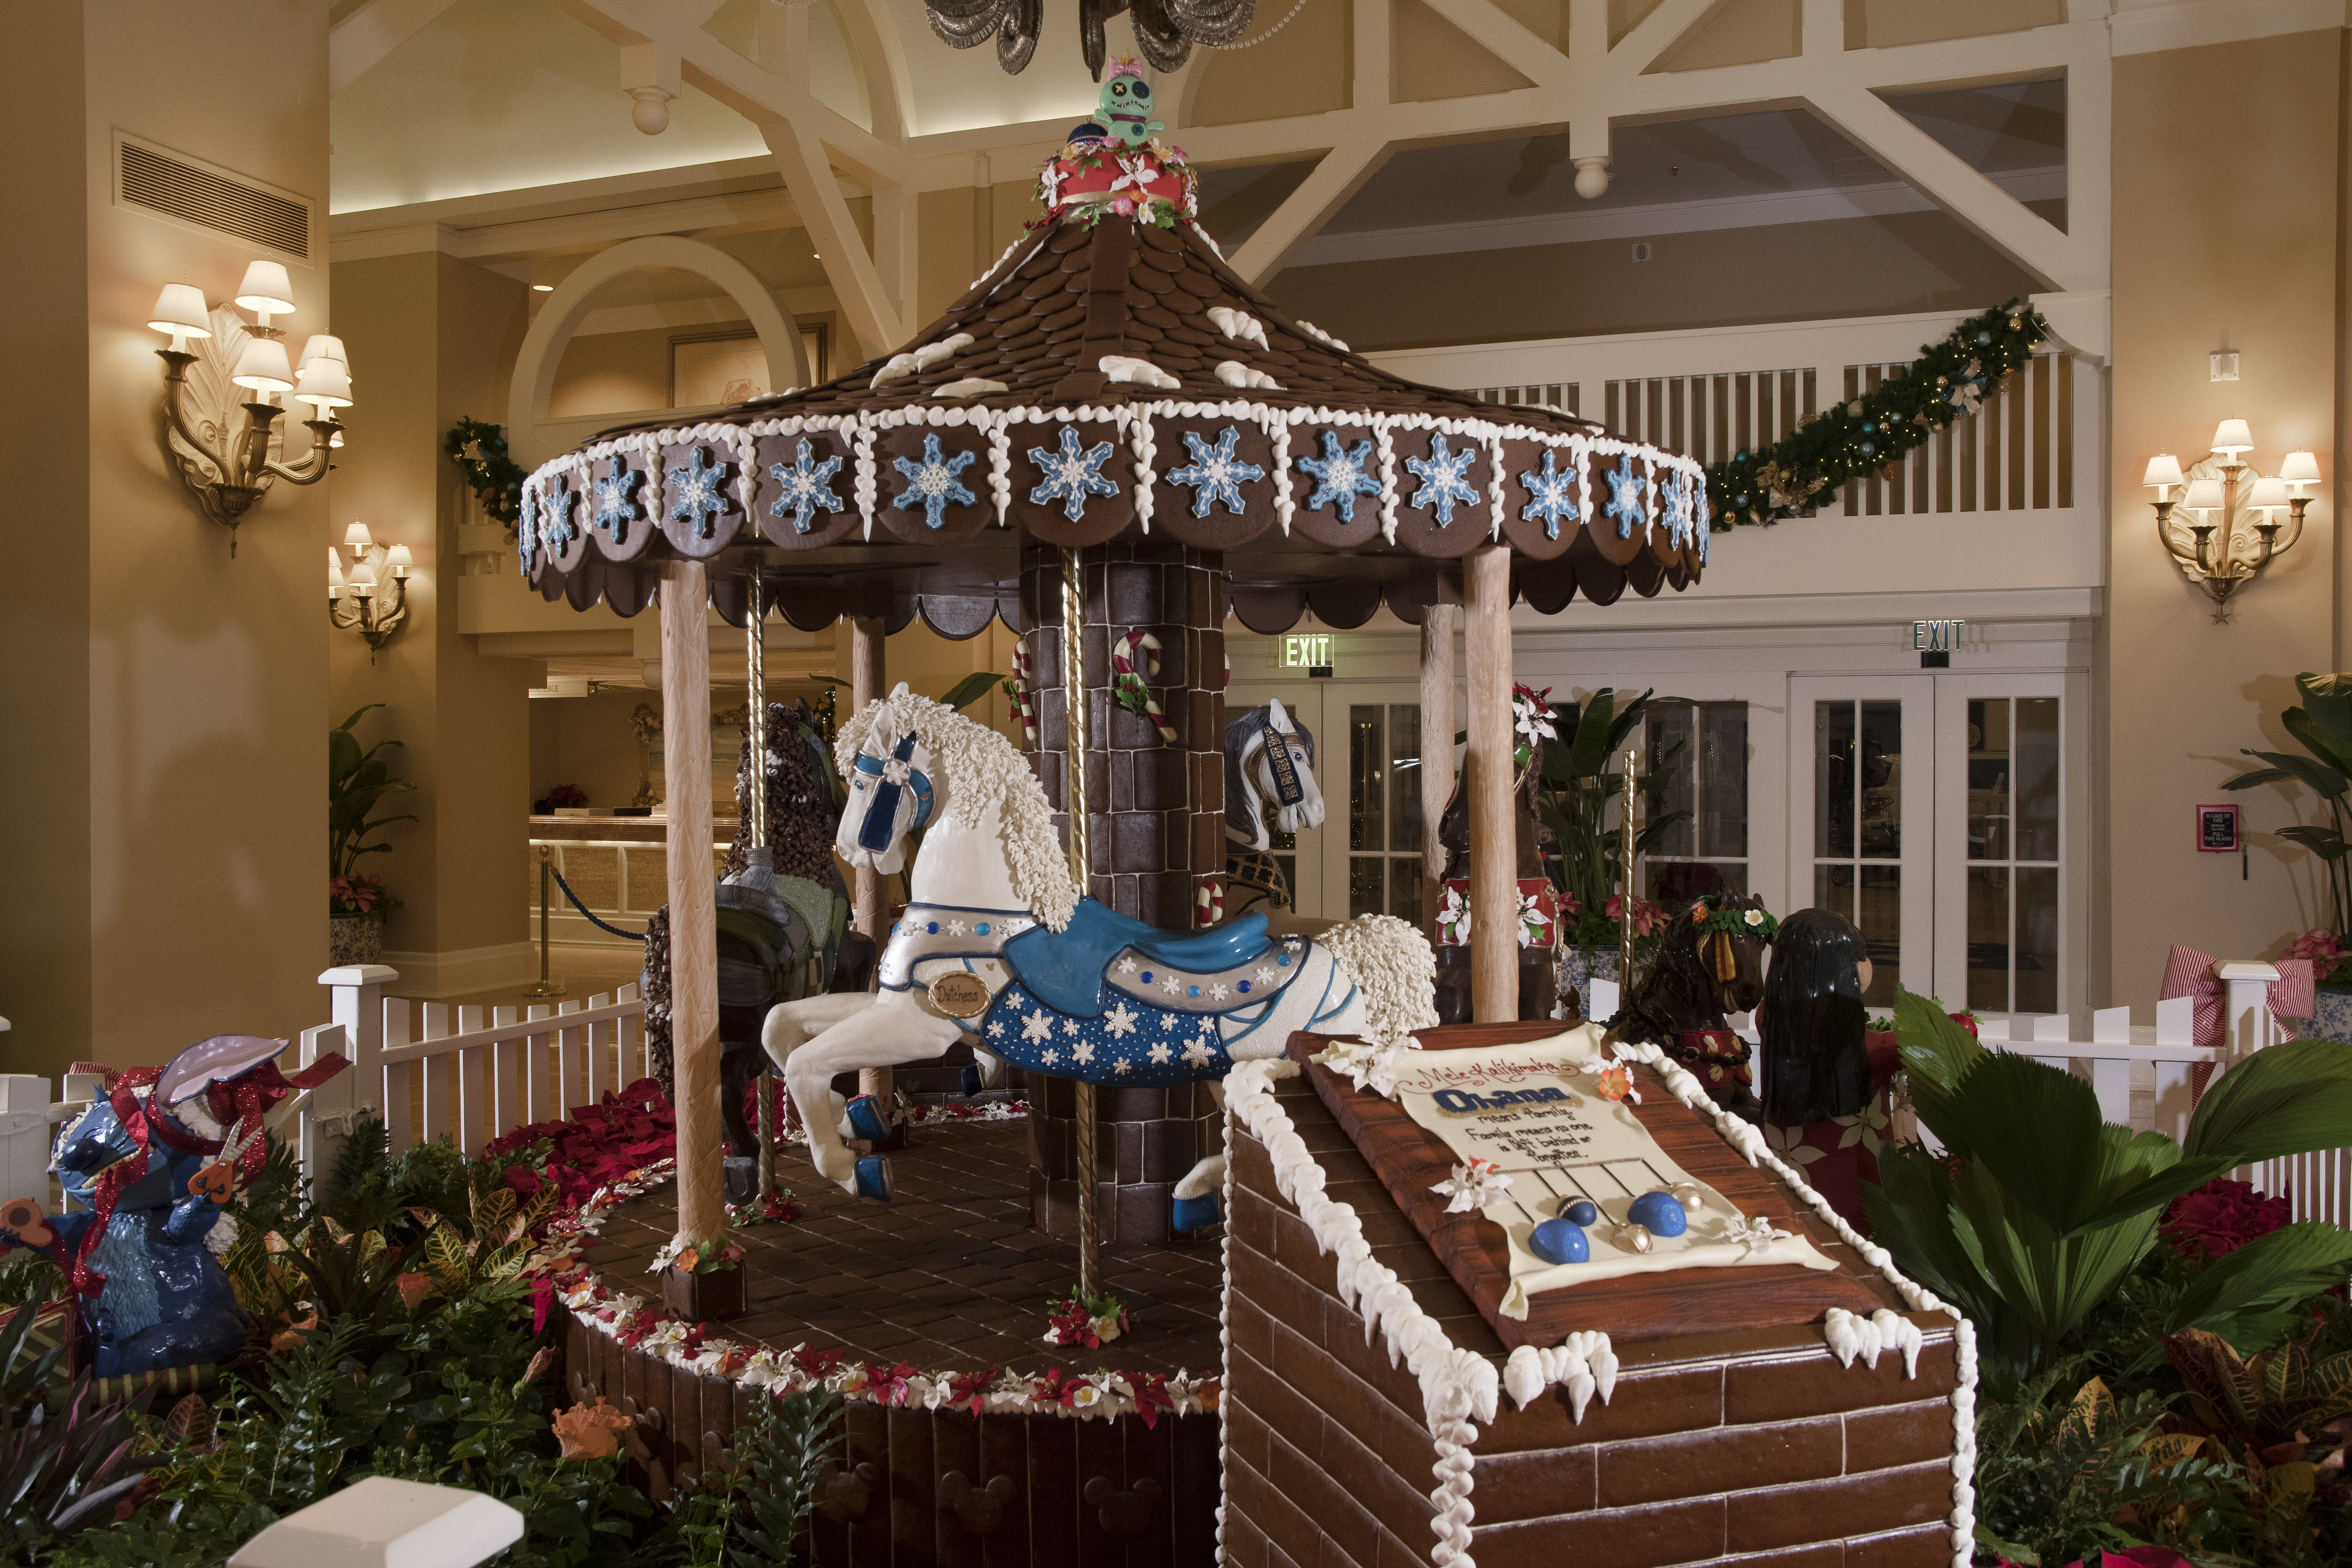 Gingerbread Horse Carousel at Disney's Beach Club Resort at Walt Disney World Resort in Orlando